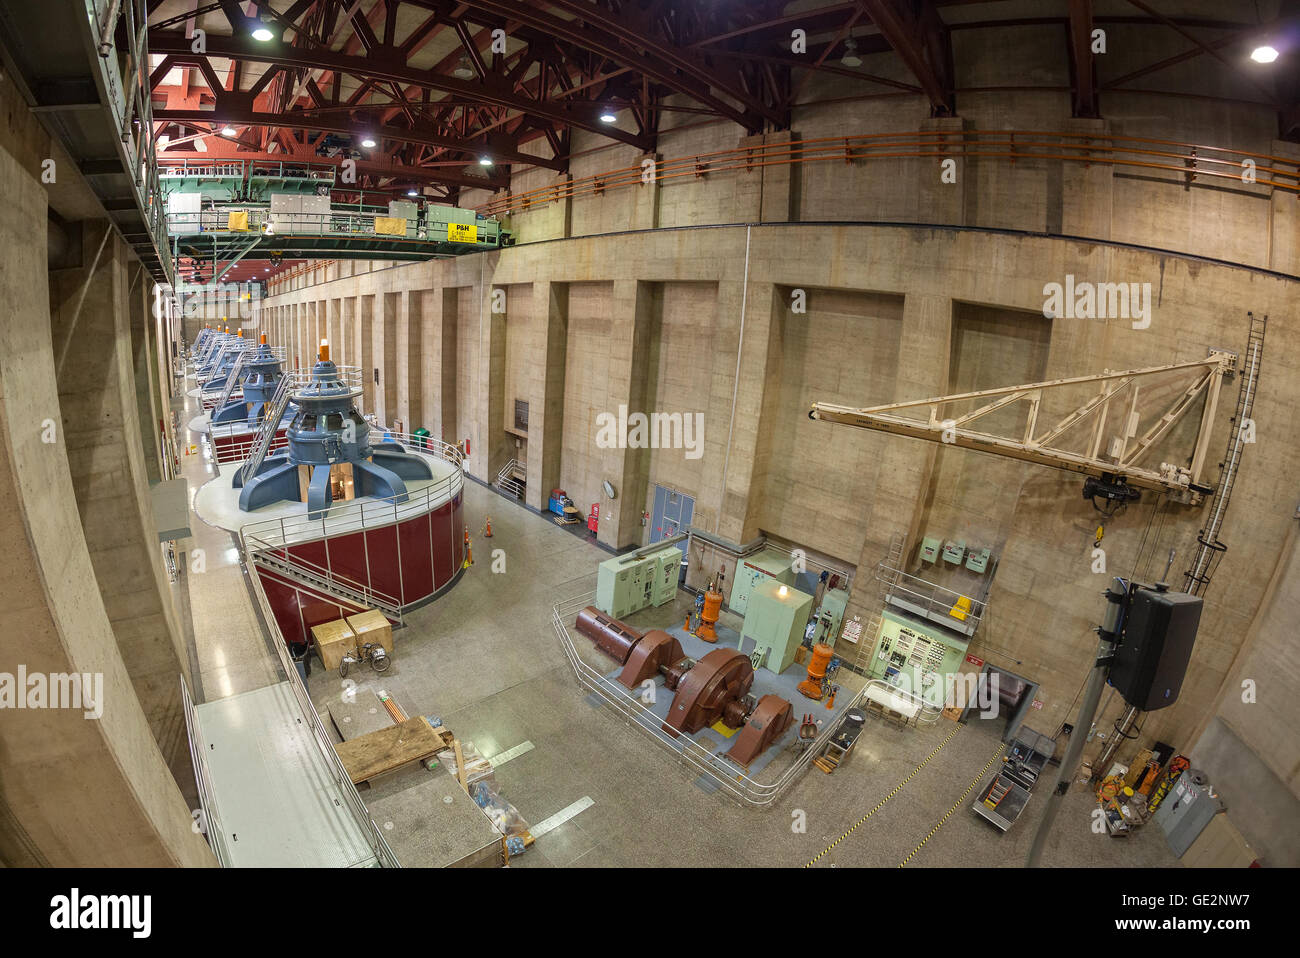 Fisheye lens picture of Hoover Dam interior with generators. Stock Photo